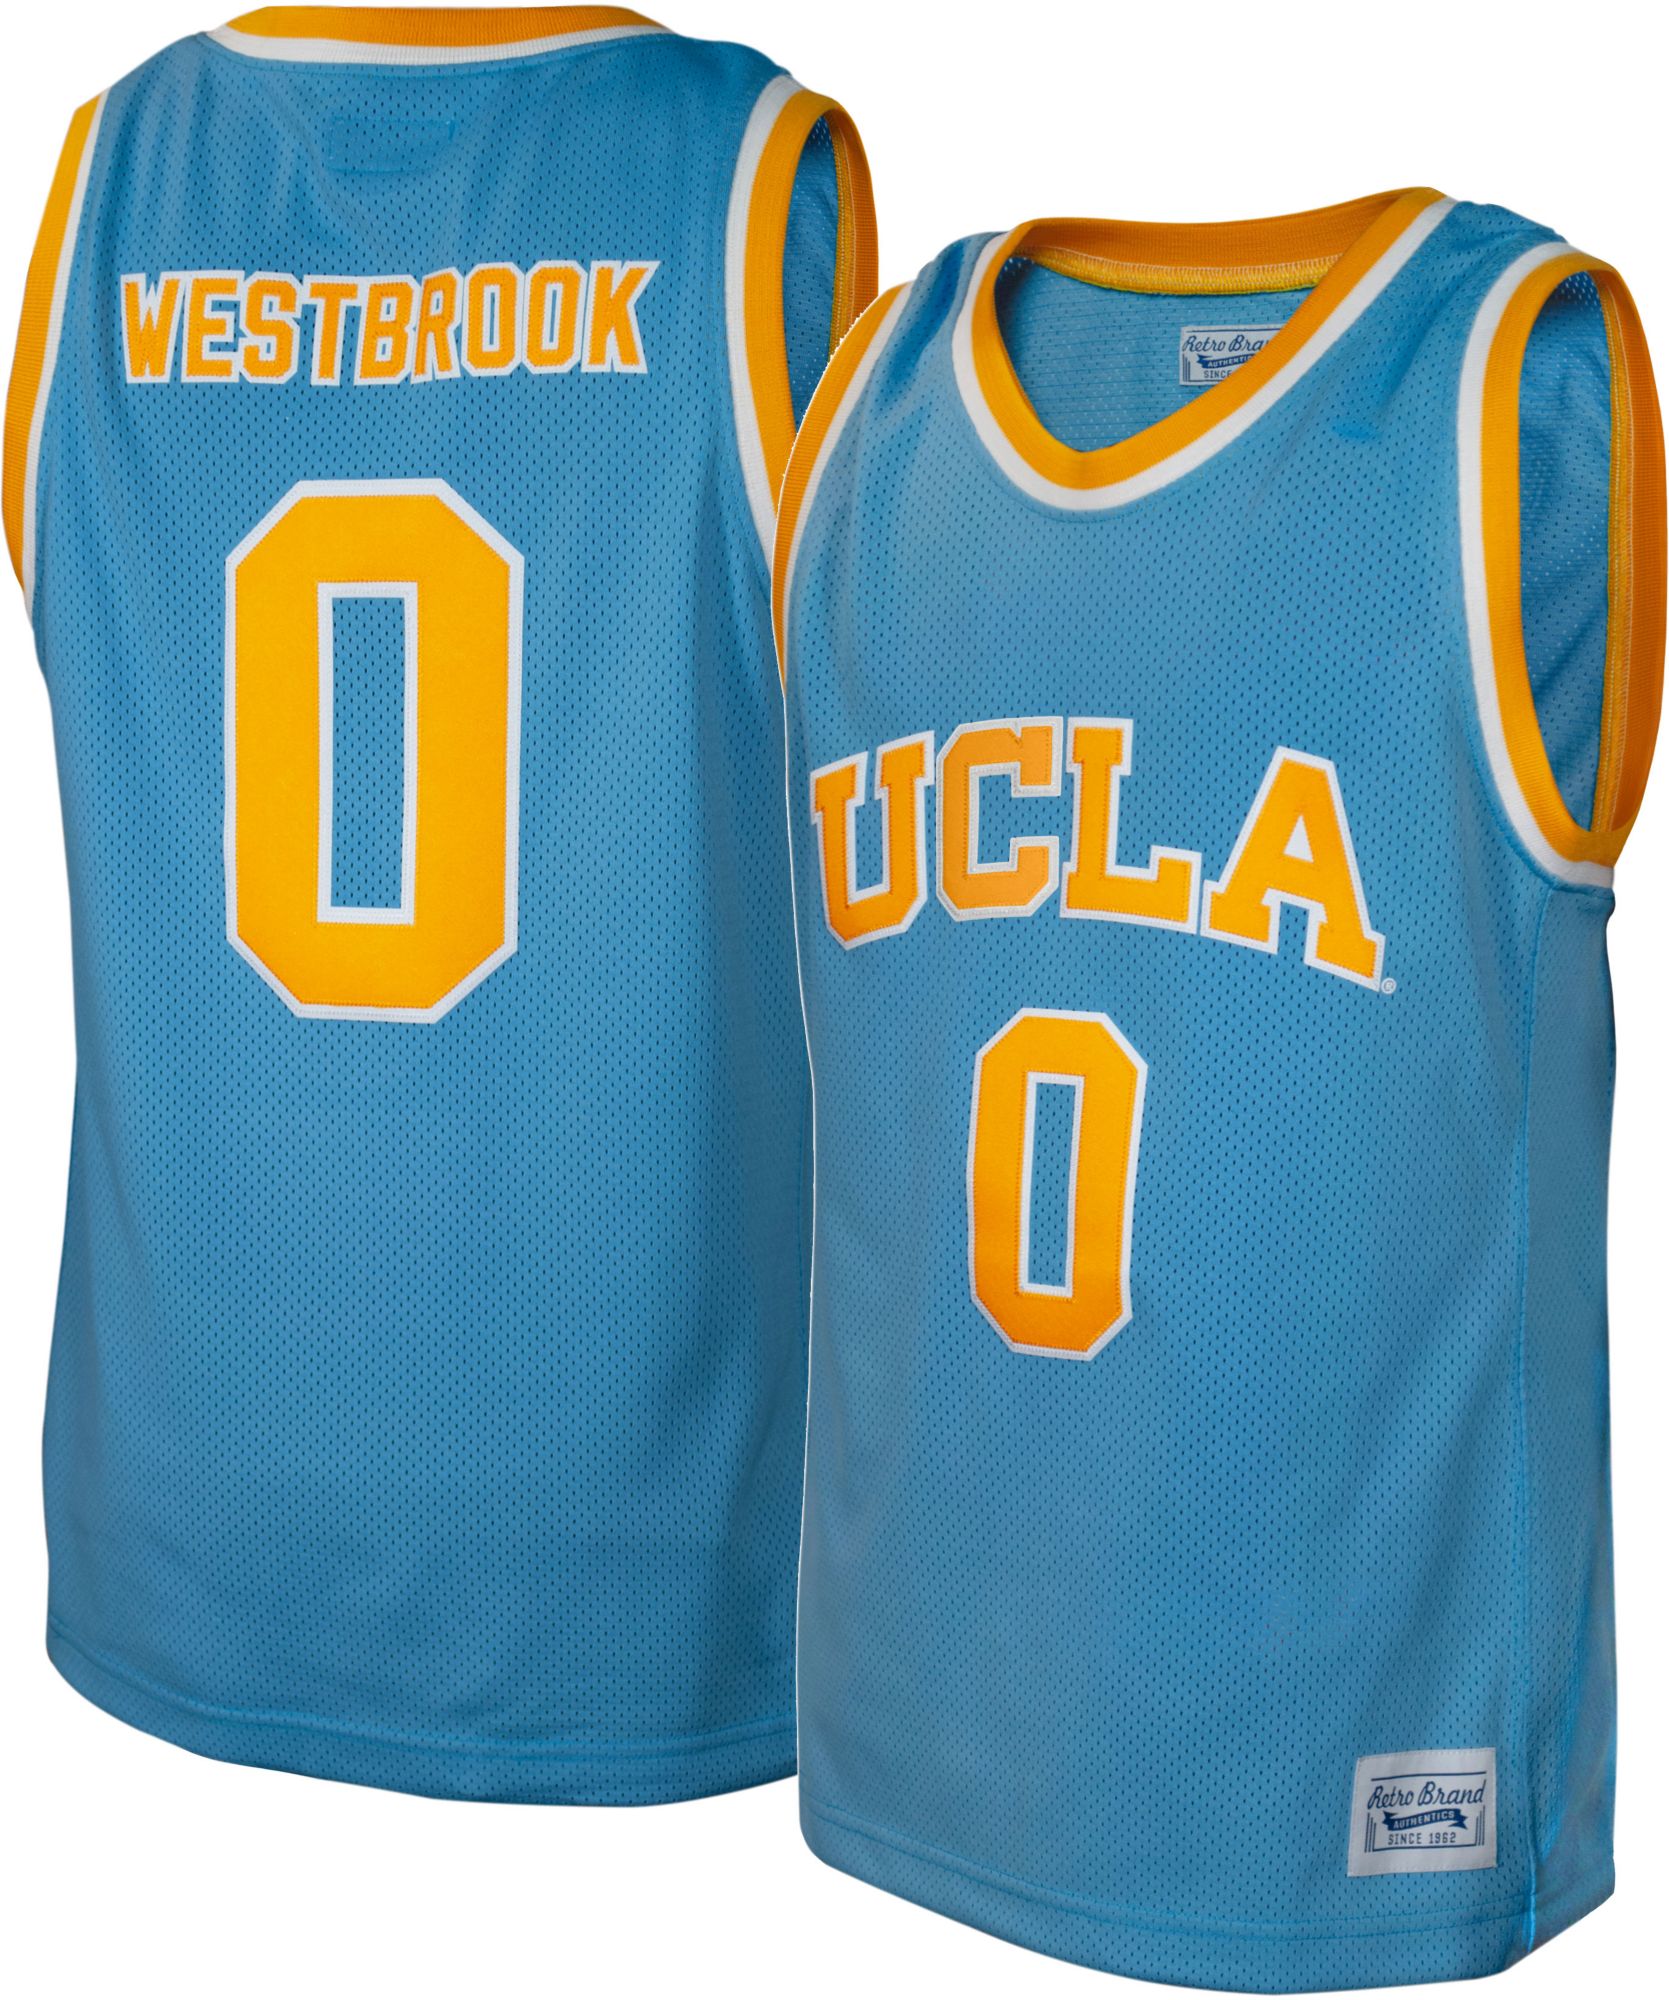 Jordan Men's UCLA Bruins #1 True Blue Replica Basketball Jersey, Large